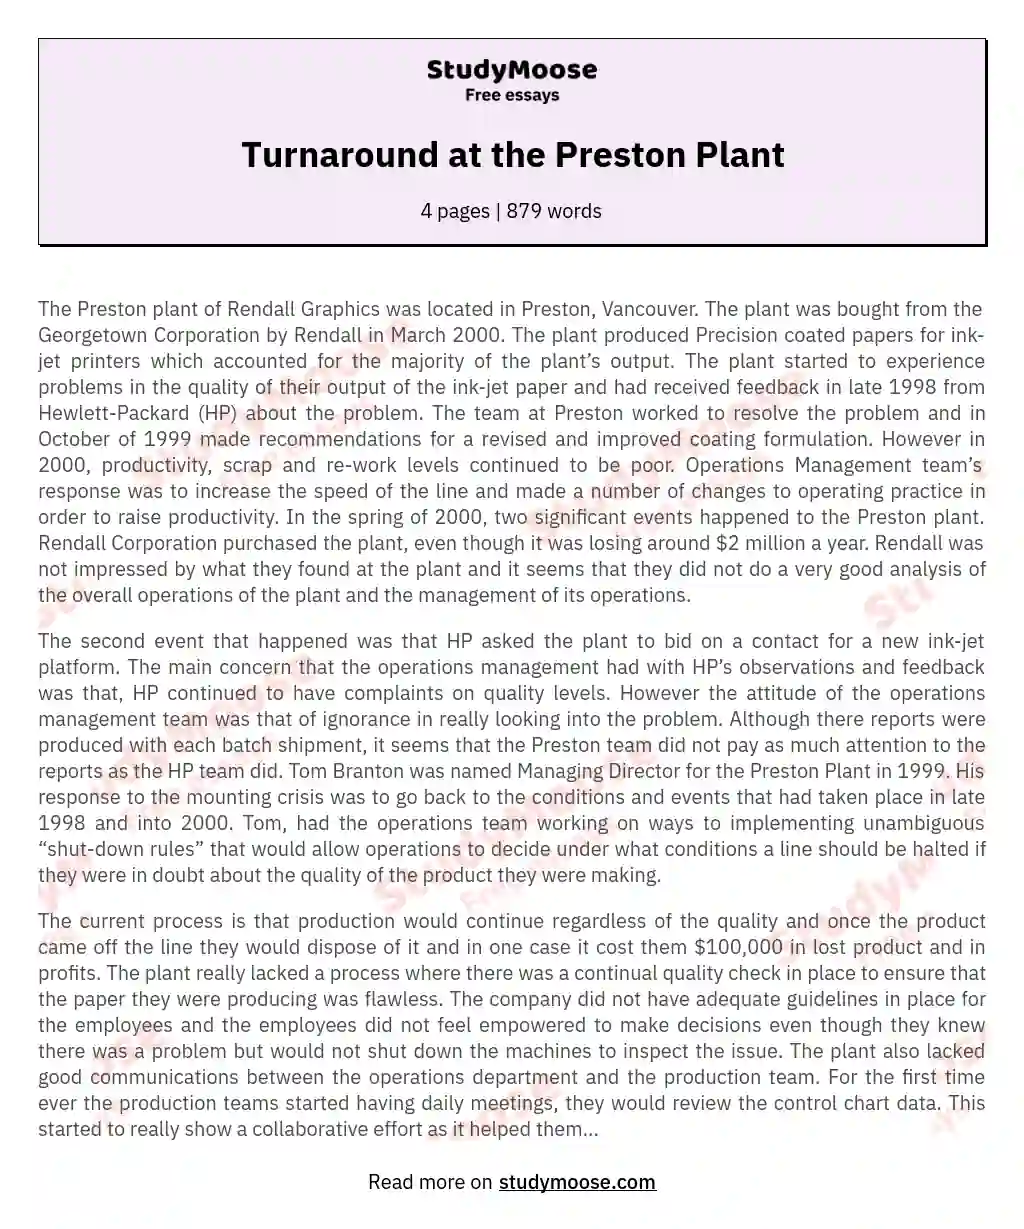 Turnaround at the Preston Plant